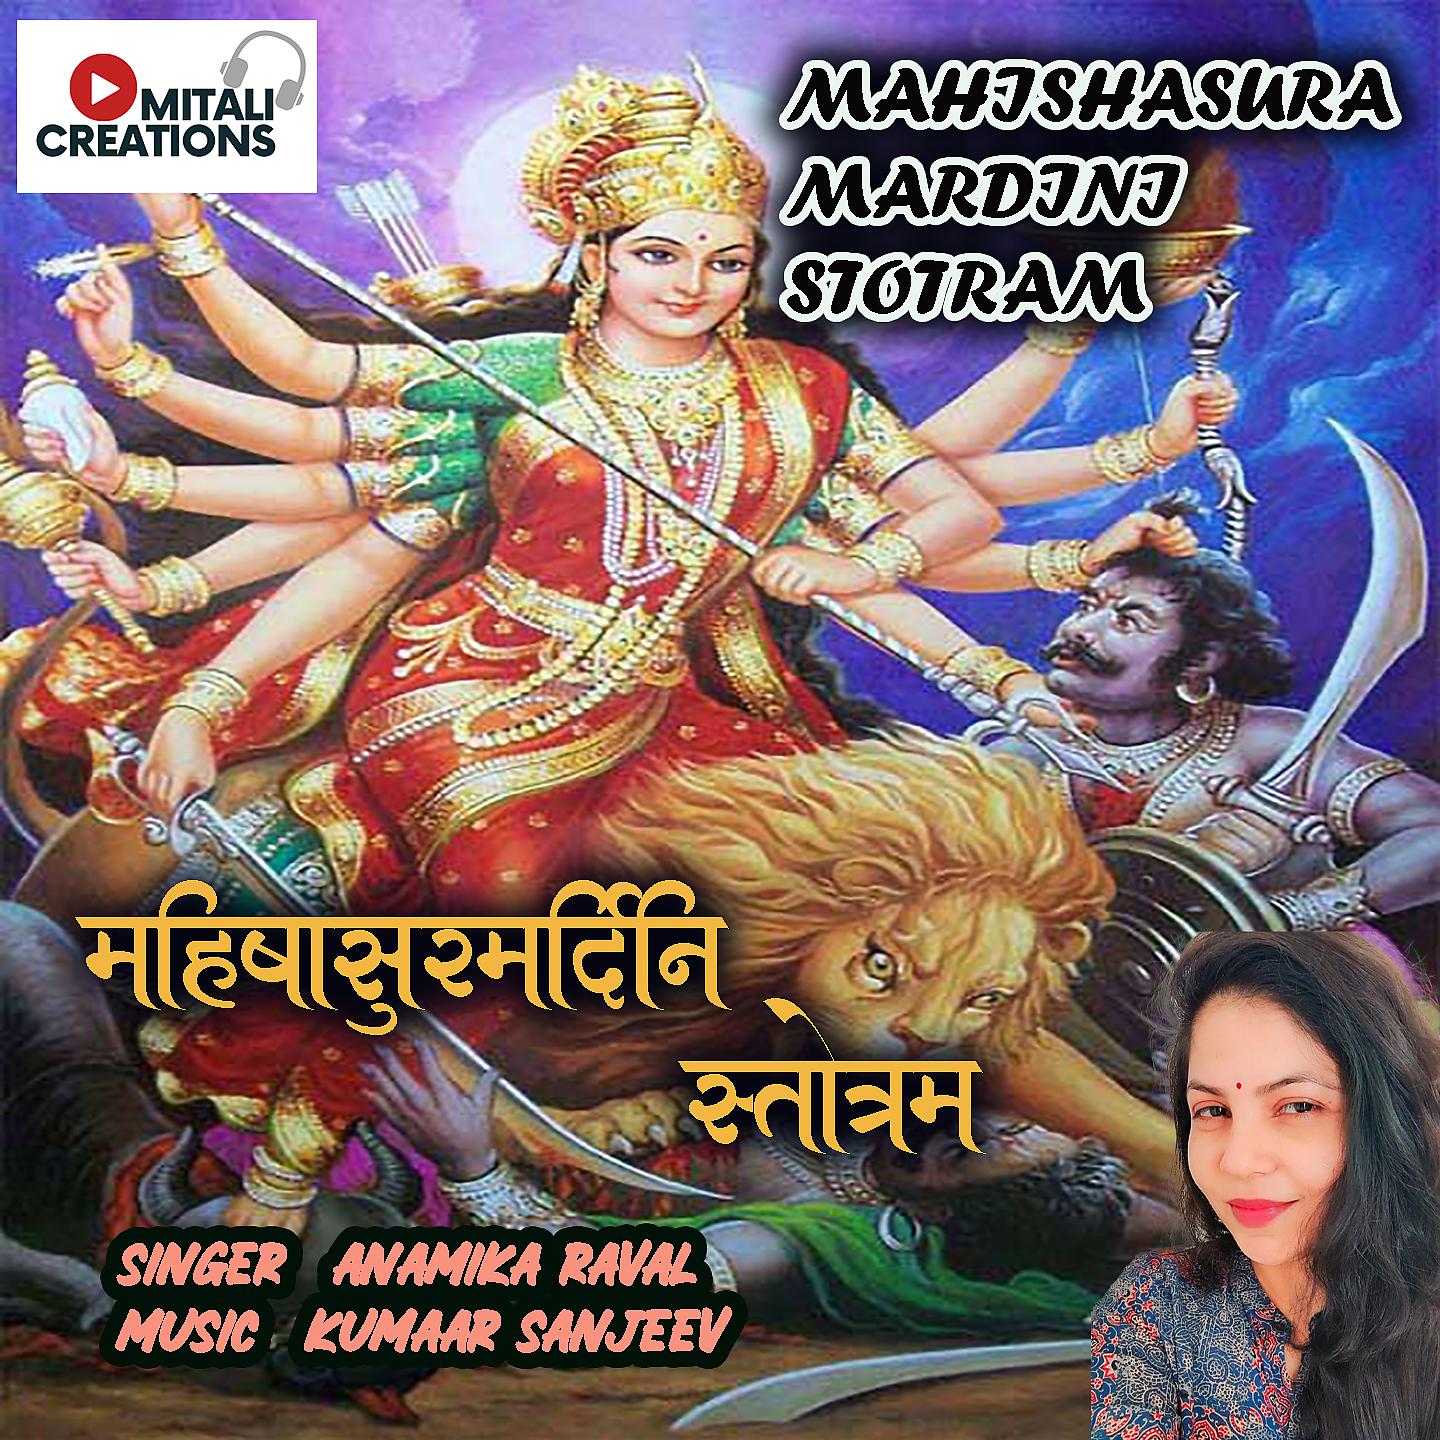 Постер альбома Mahishasura Mardini Stotram